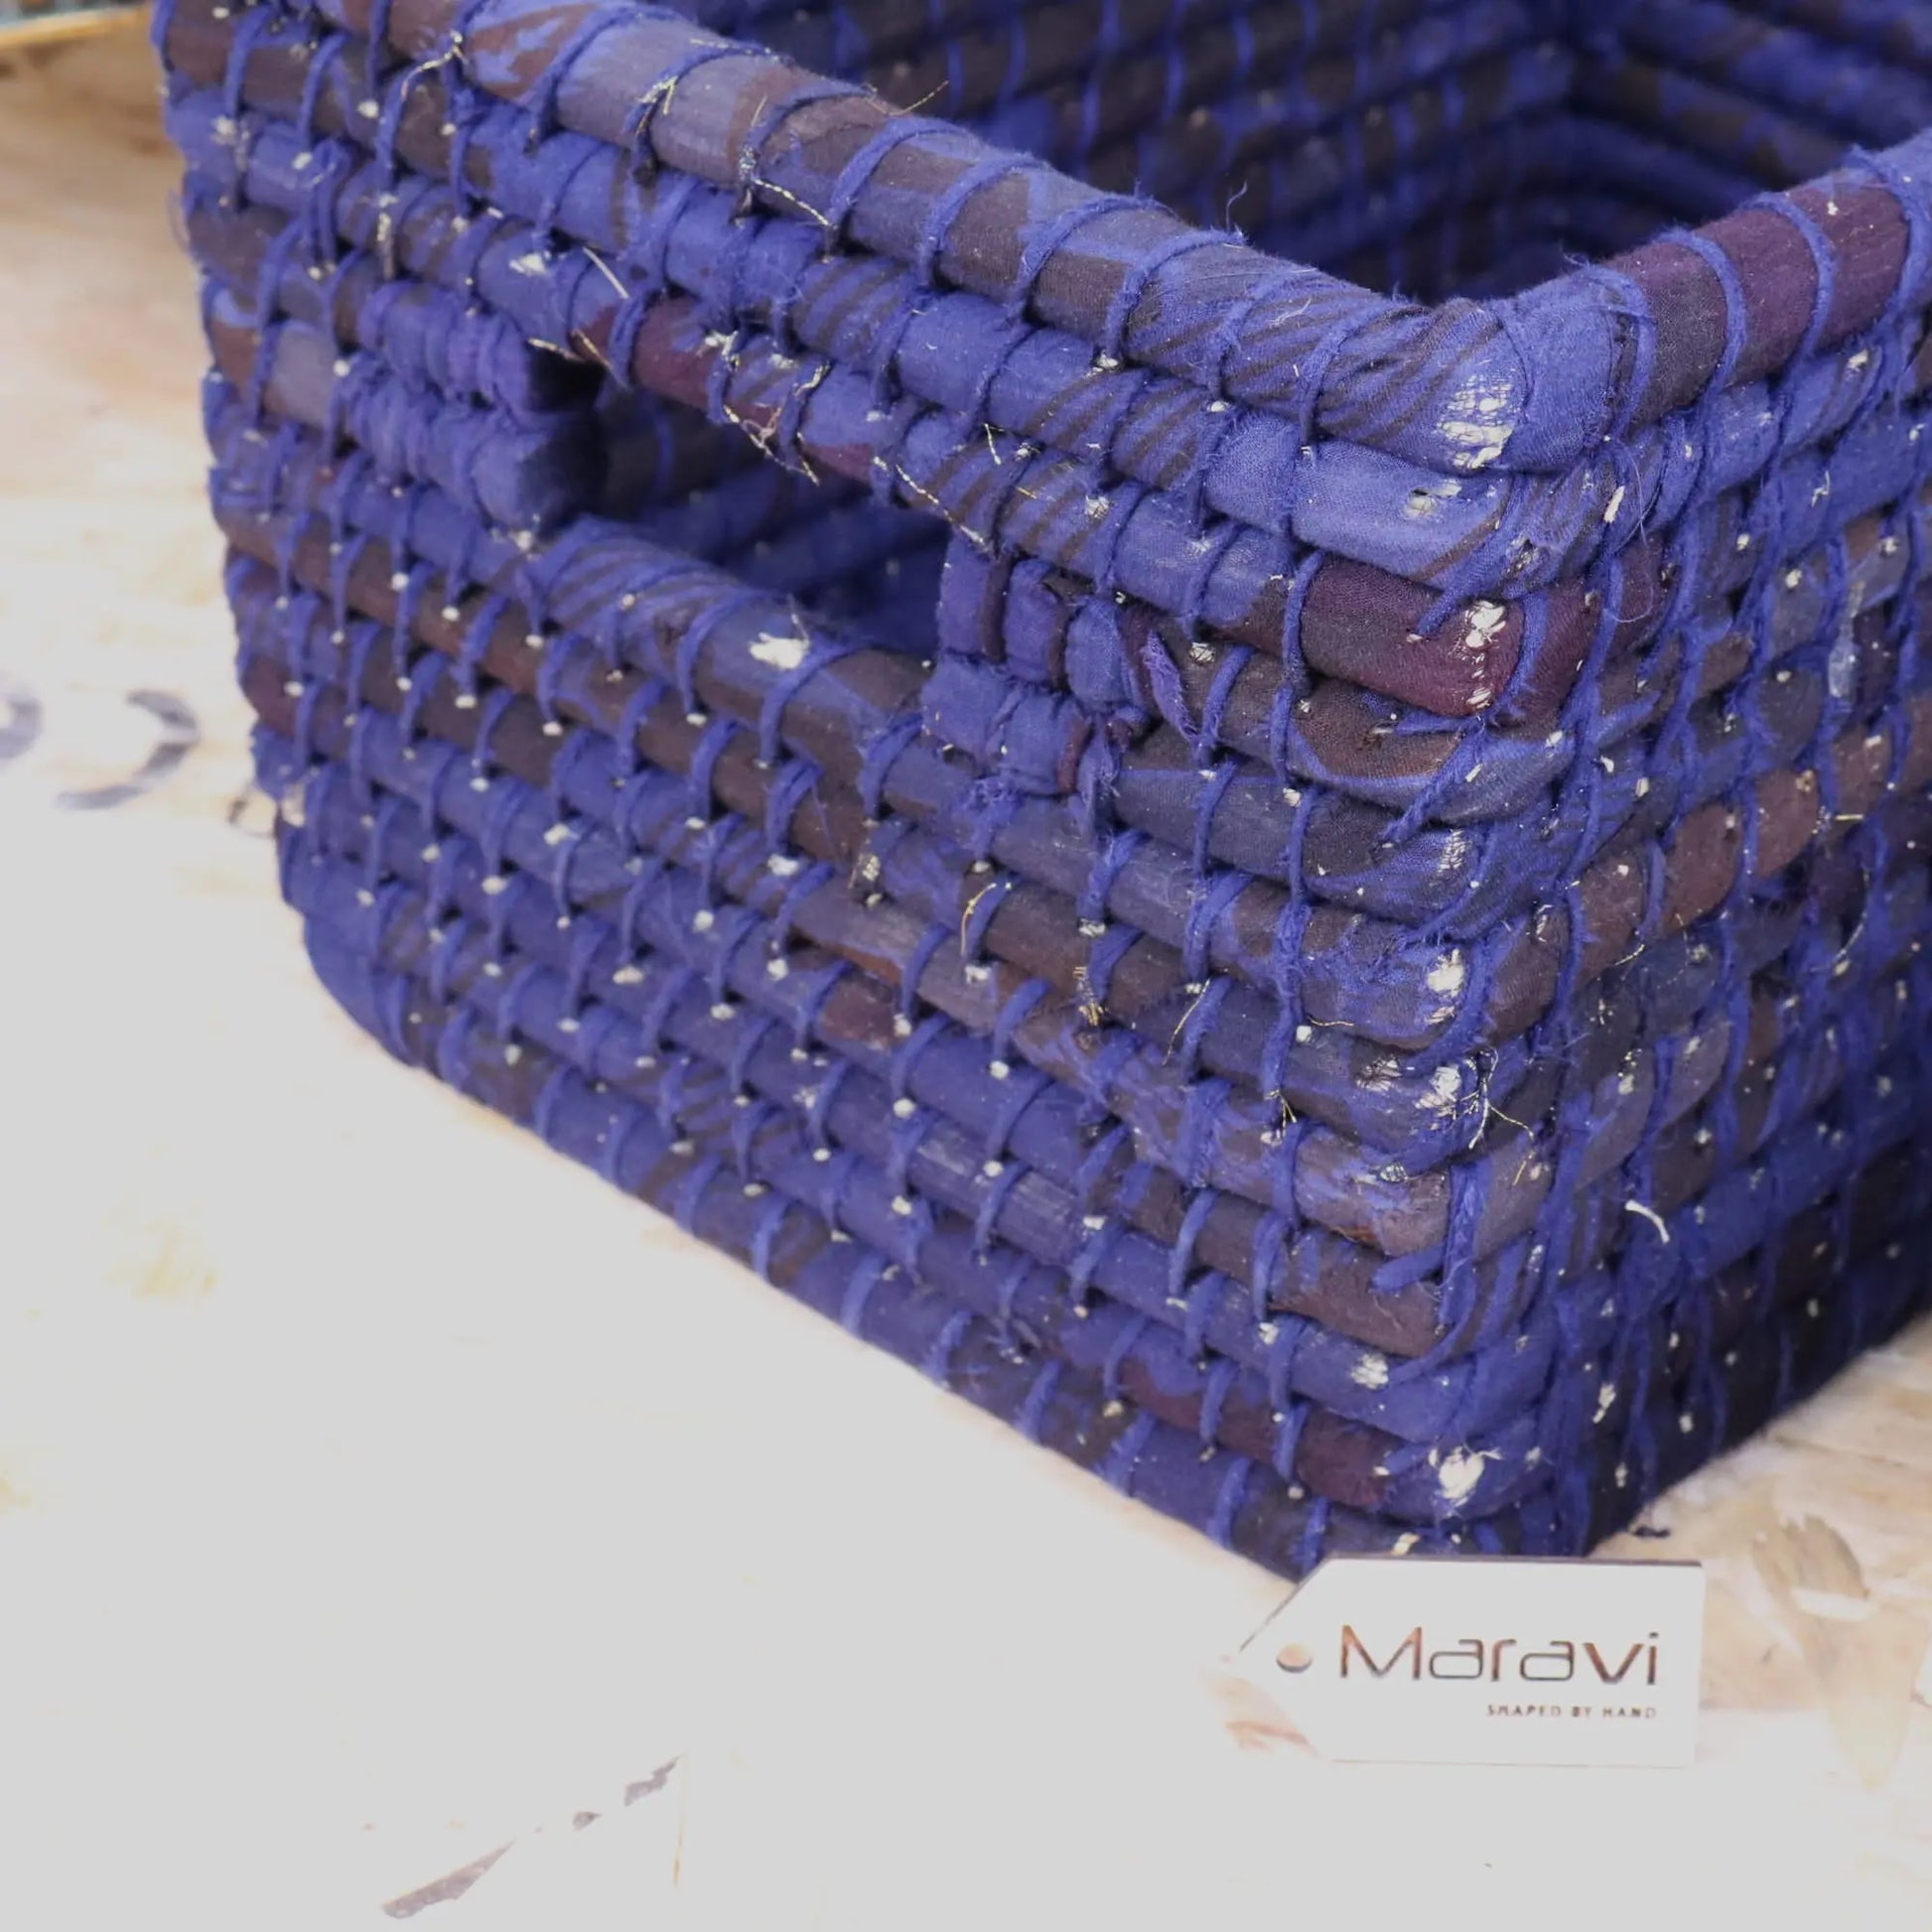 Ananda Recycled Sari Material Storage Basket Set - Closeup of Sari Fabric